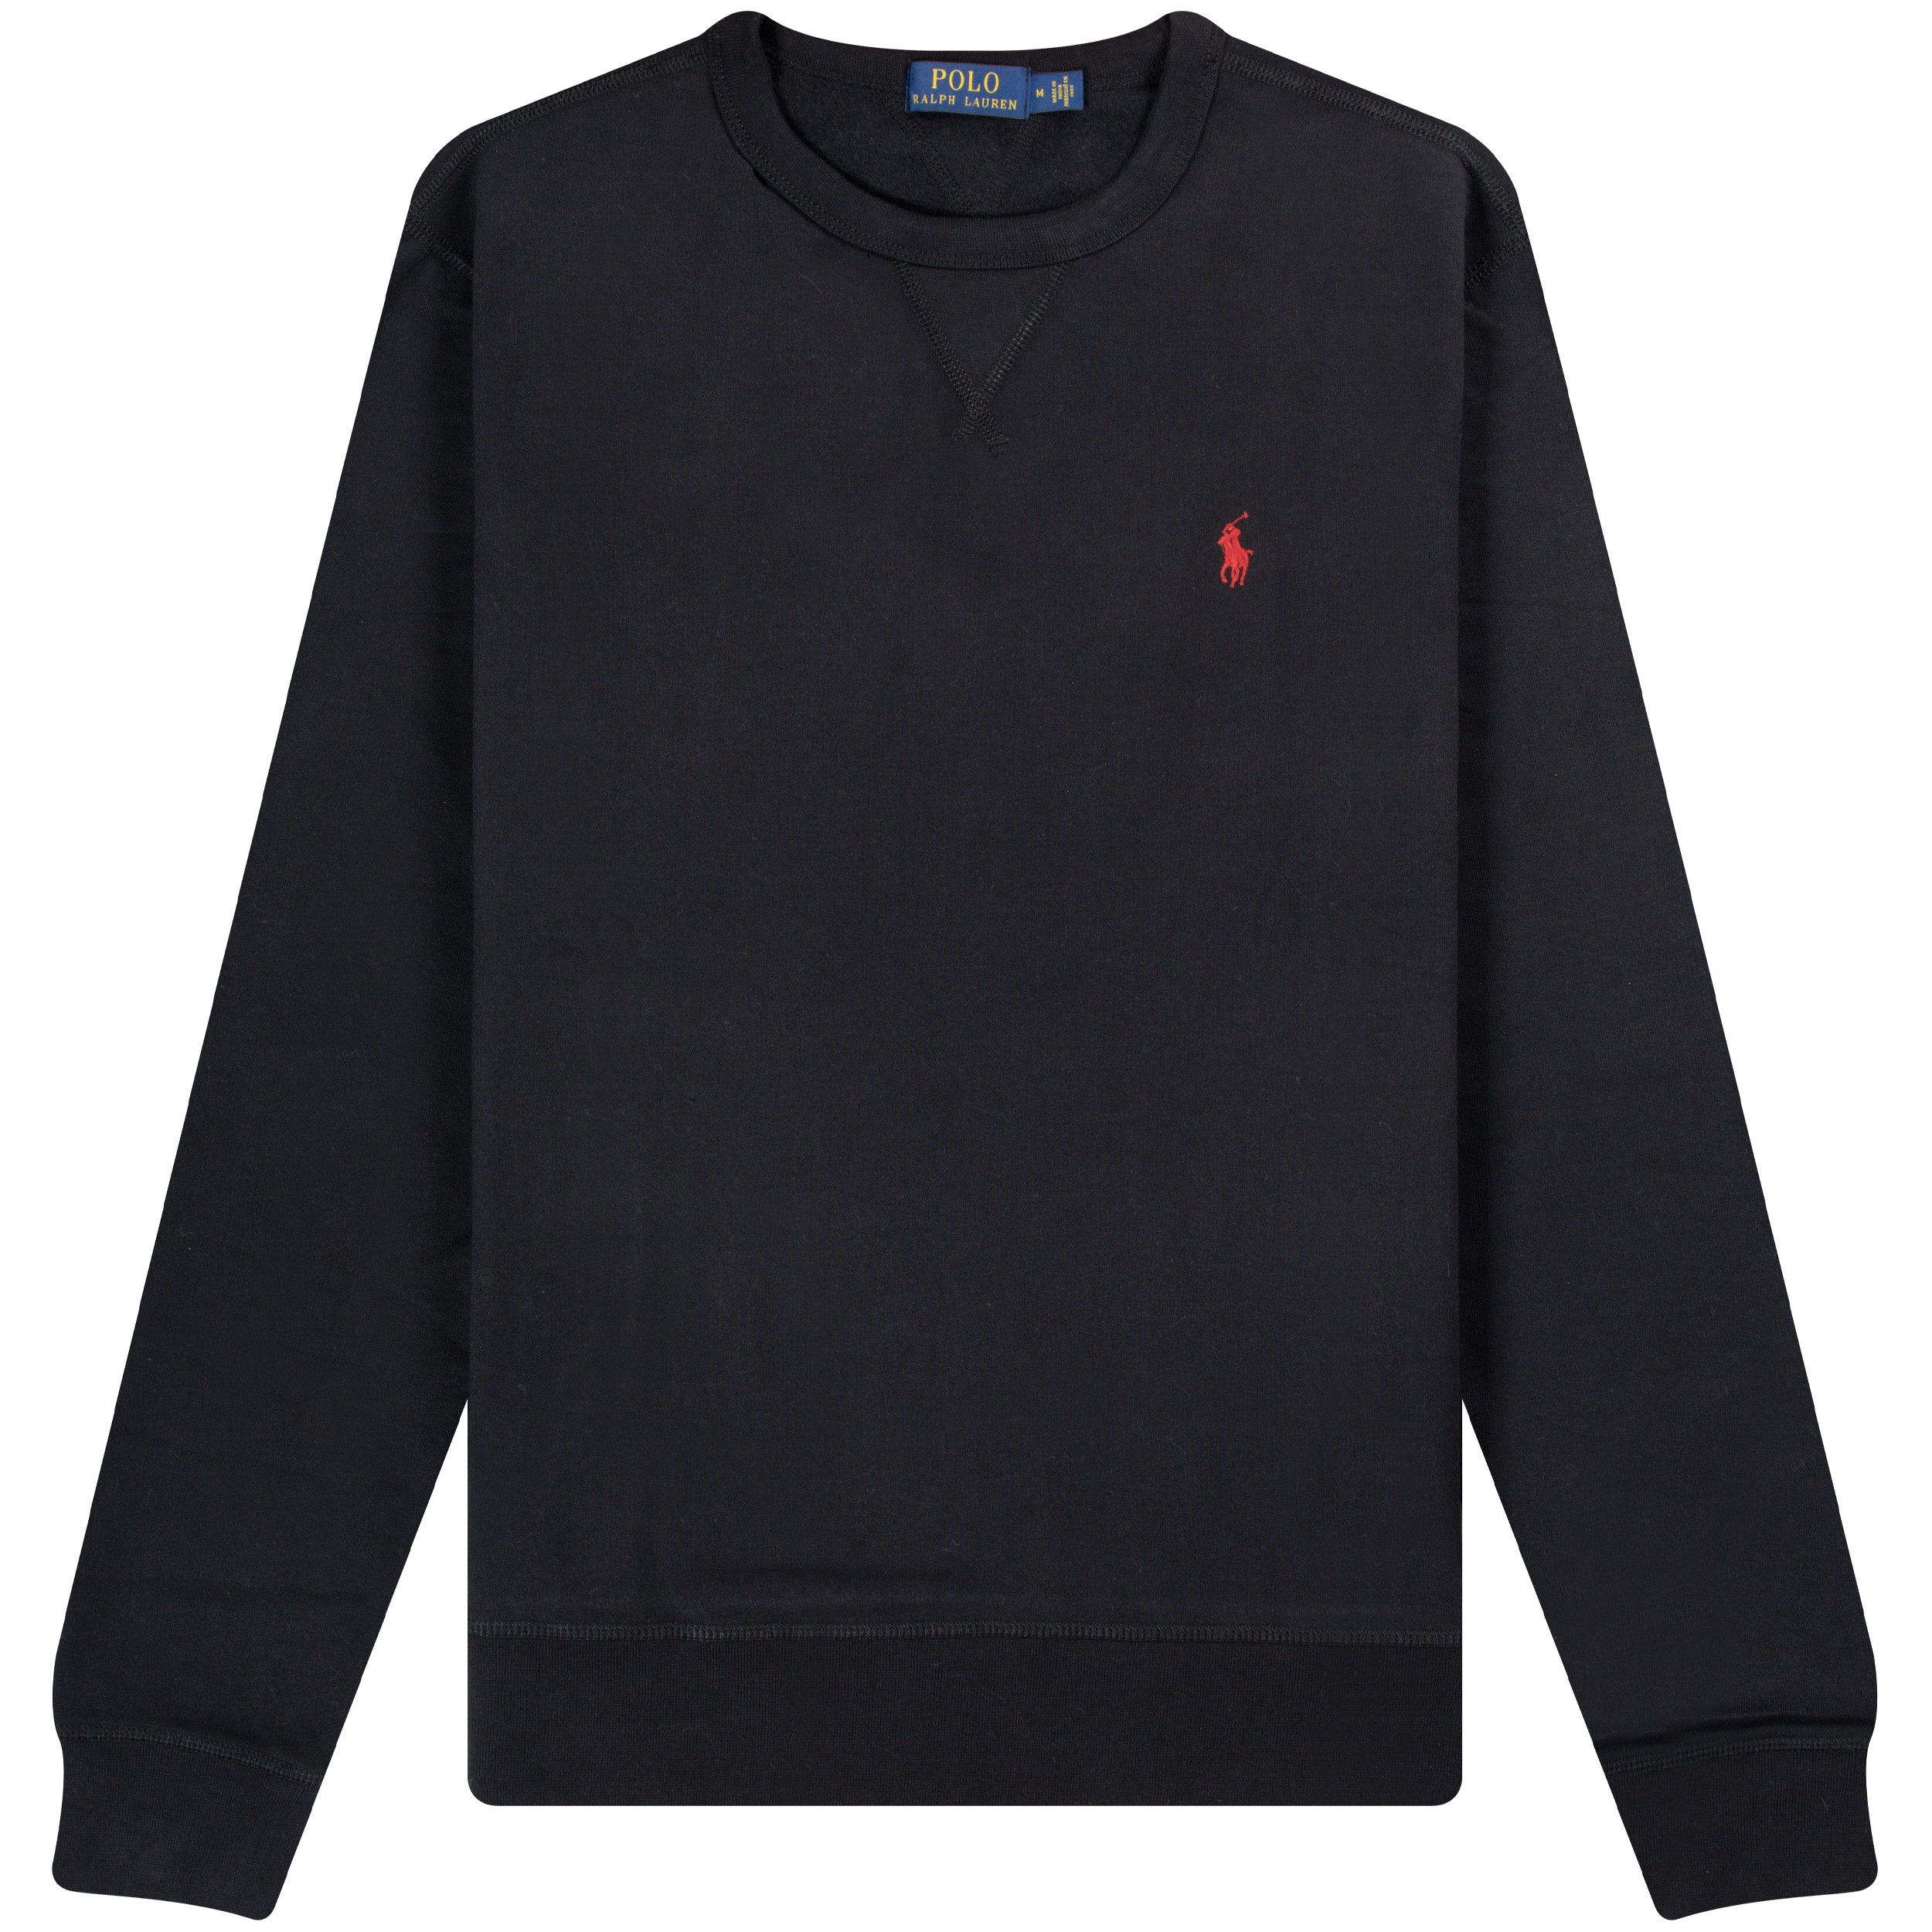 Polo Ralph Lauren 'CORE' Classic Crewneck Sweatshirt Black